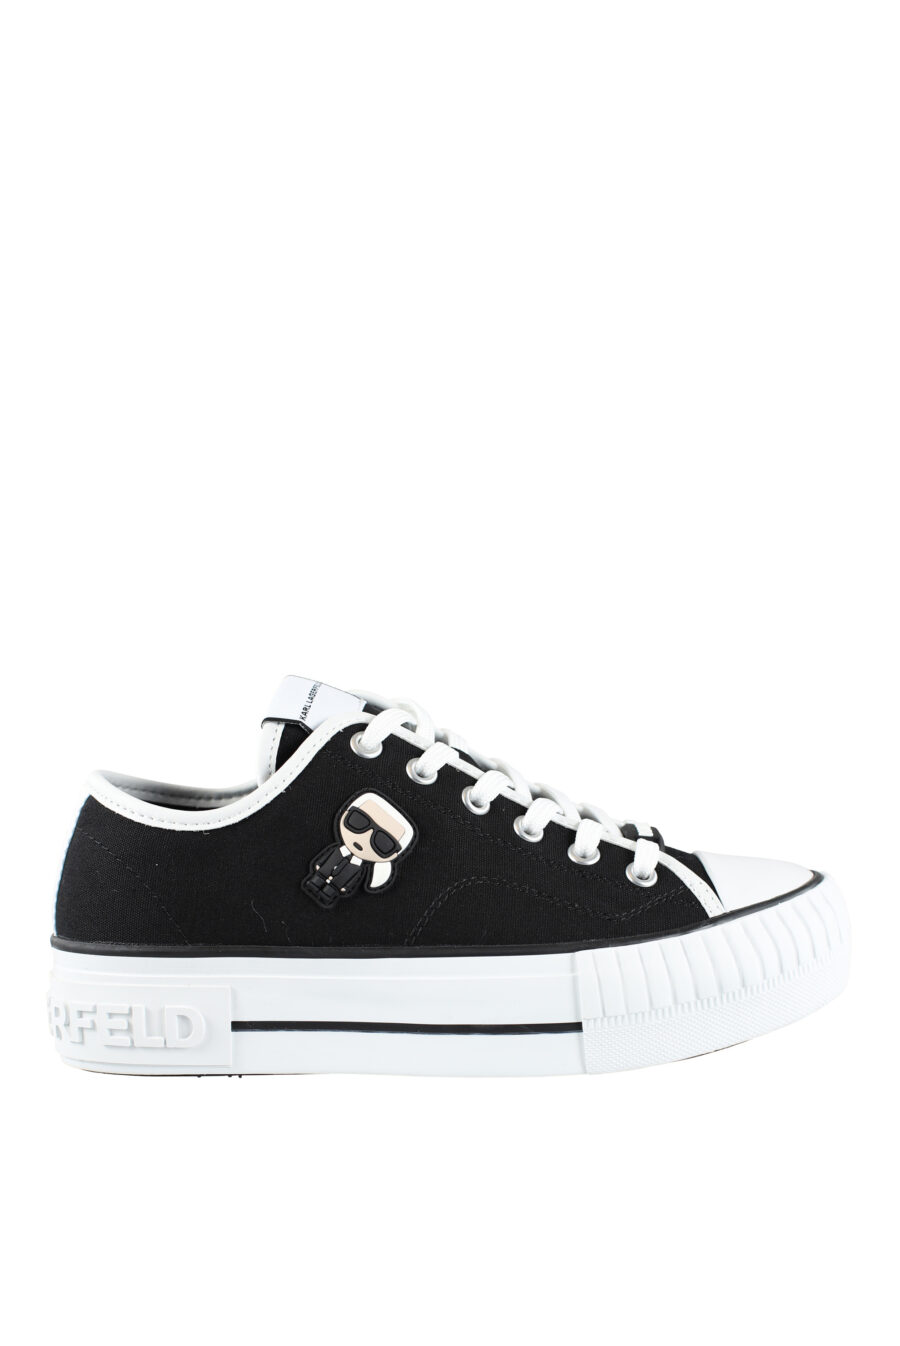 Zapatillas negras estilo converse con logo "karl" en goma - IMG 9576